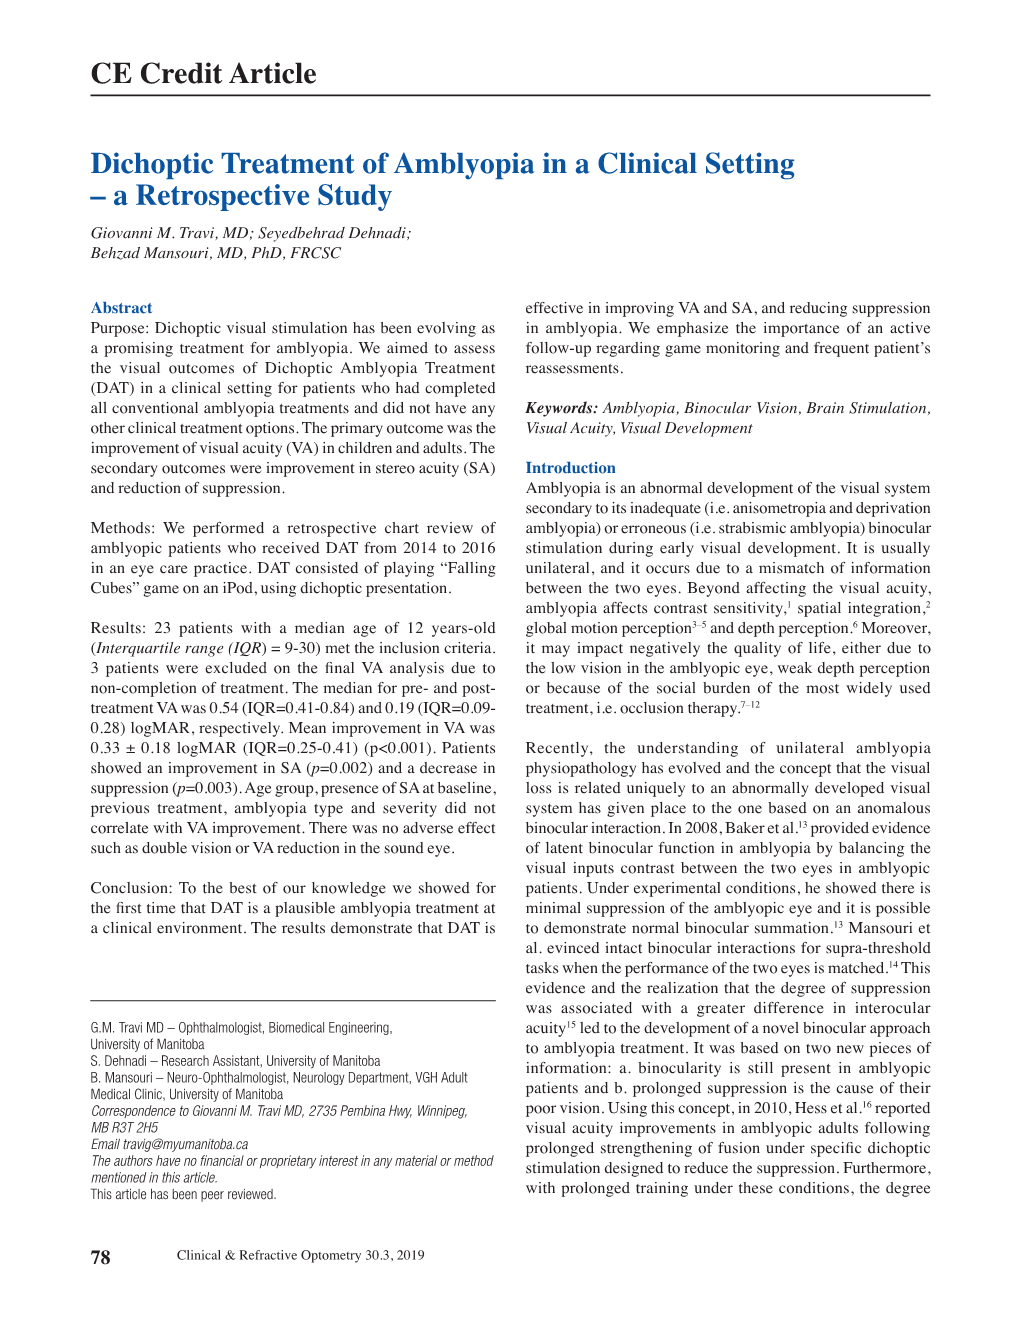 Dichoptic Treatment of Amblyopia in a Clinical Setting – a Retrospective Study Giovanni M